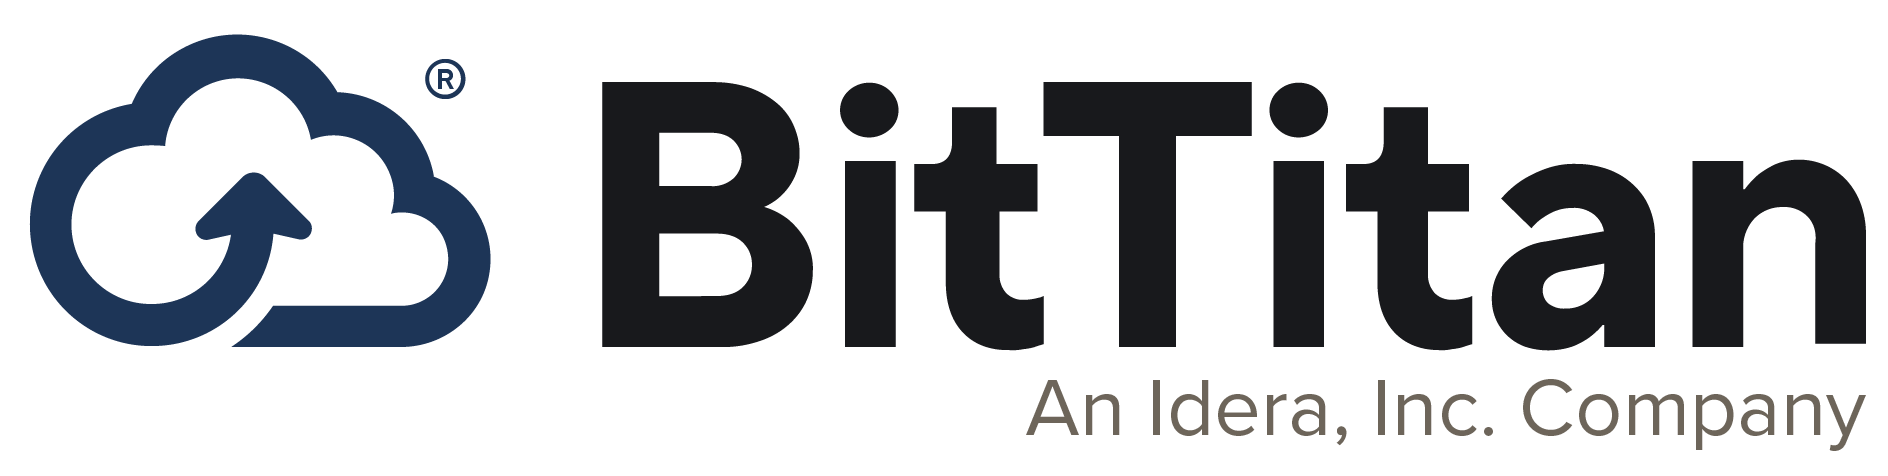 BT IDERA Logo Horizontal on Light